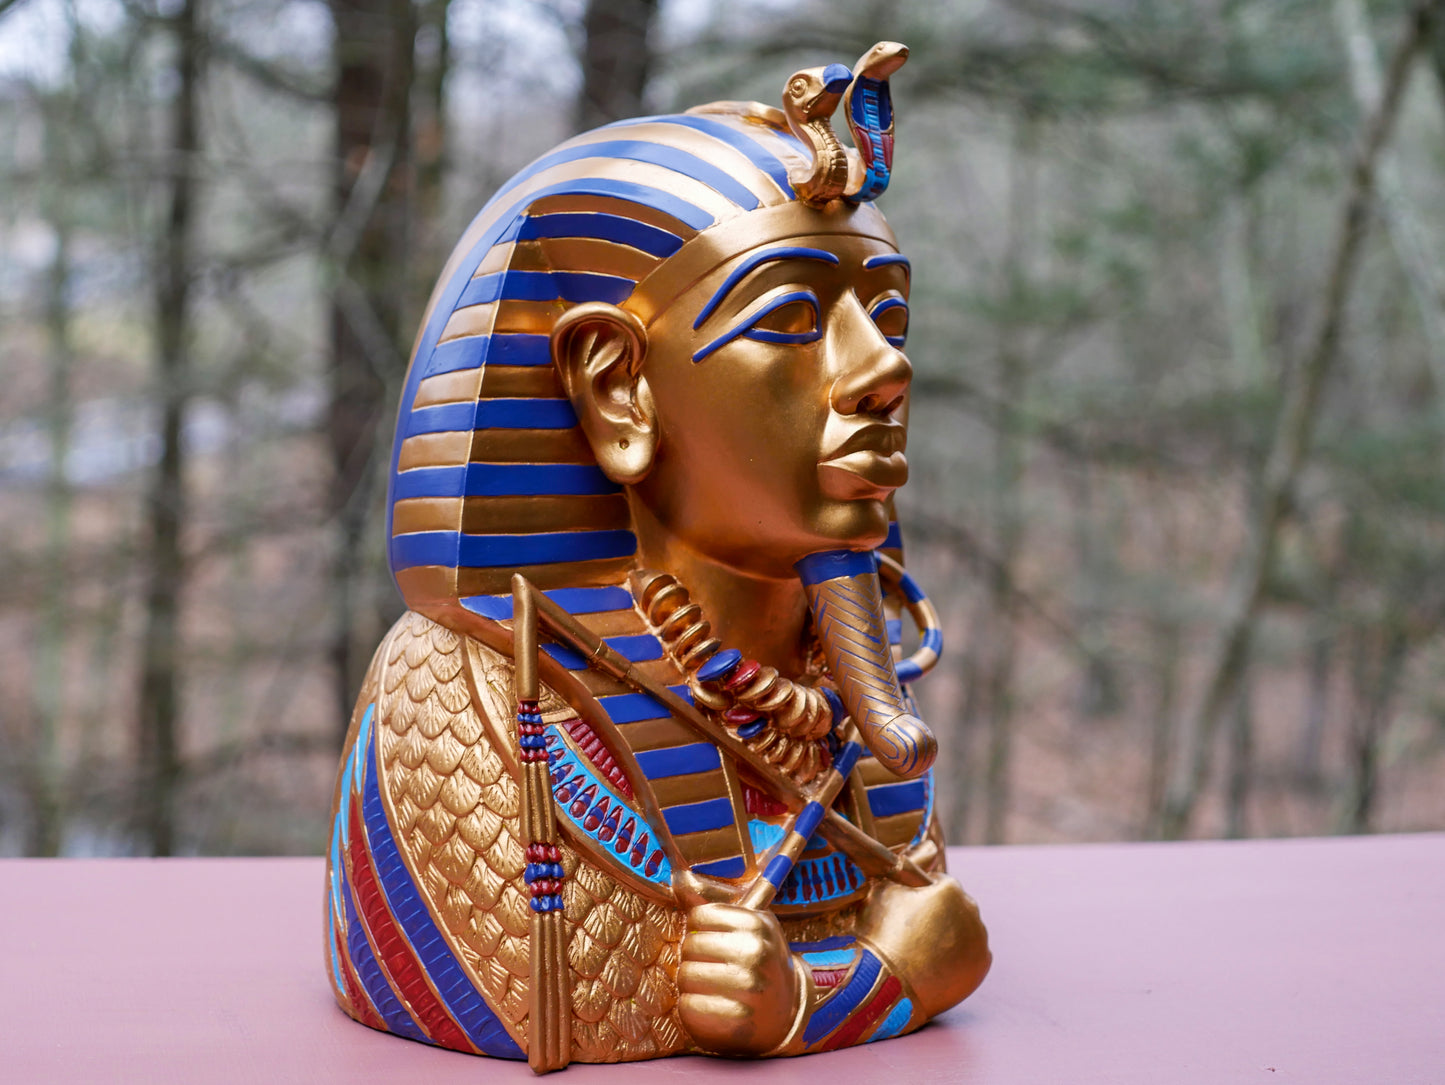 Large King Tutankamun Bust Sculpture Statue | Egyptian Home Decoration Gift 12.25"